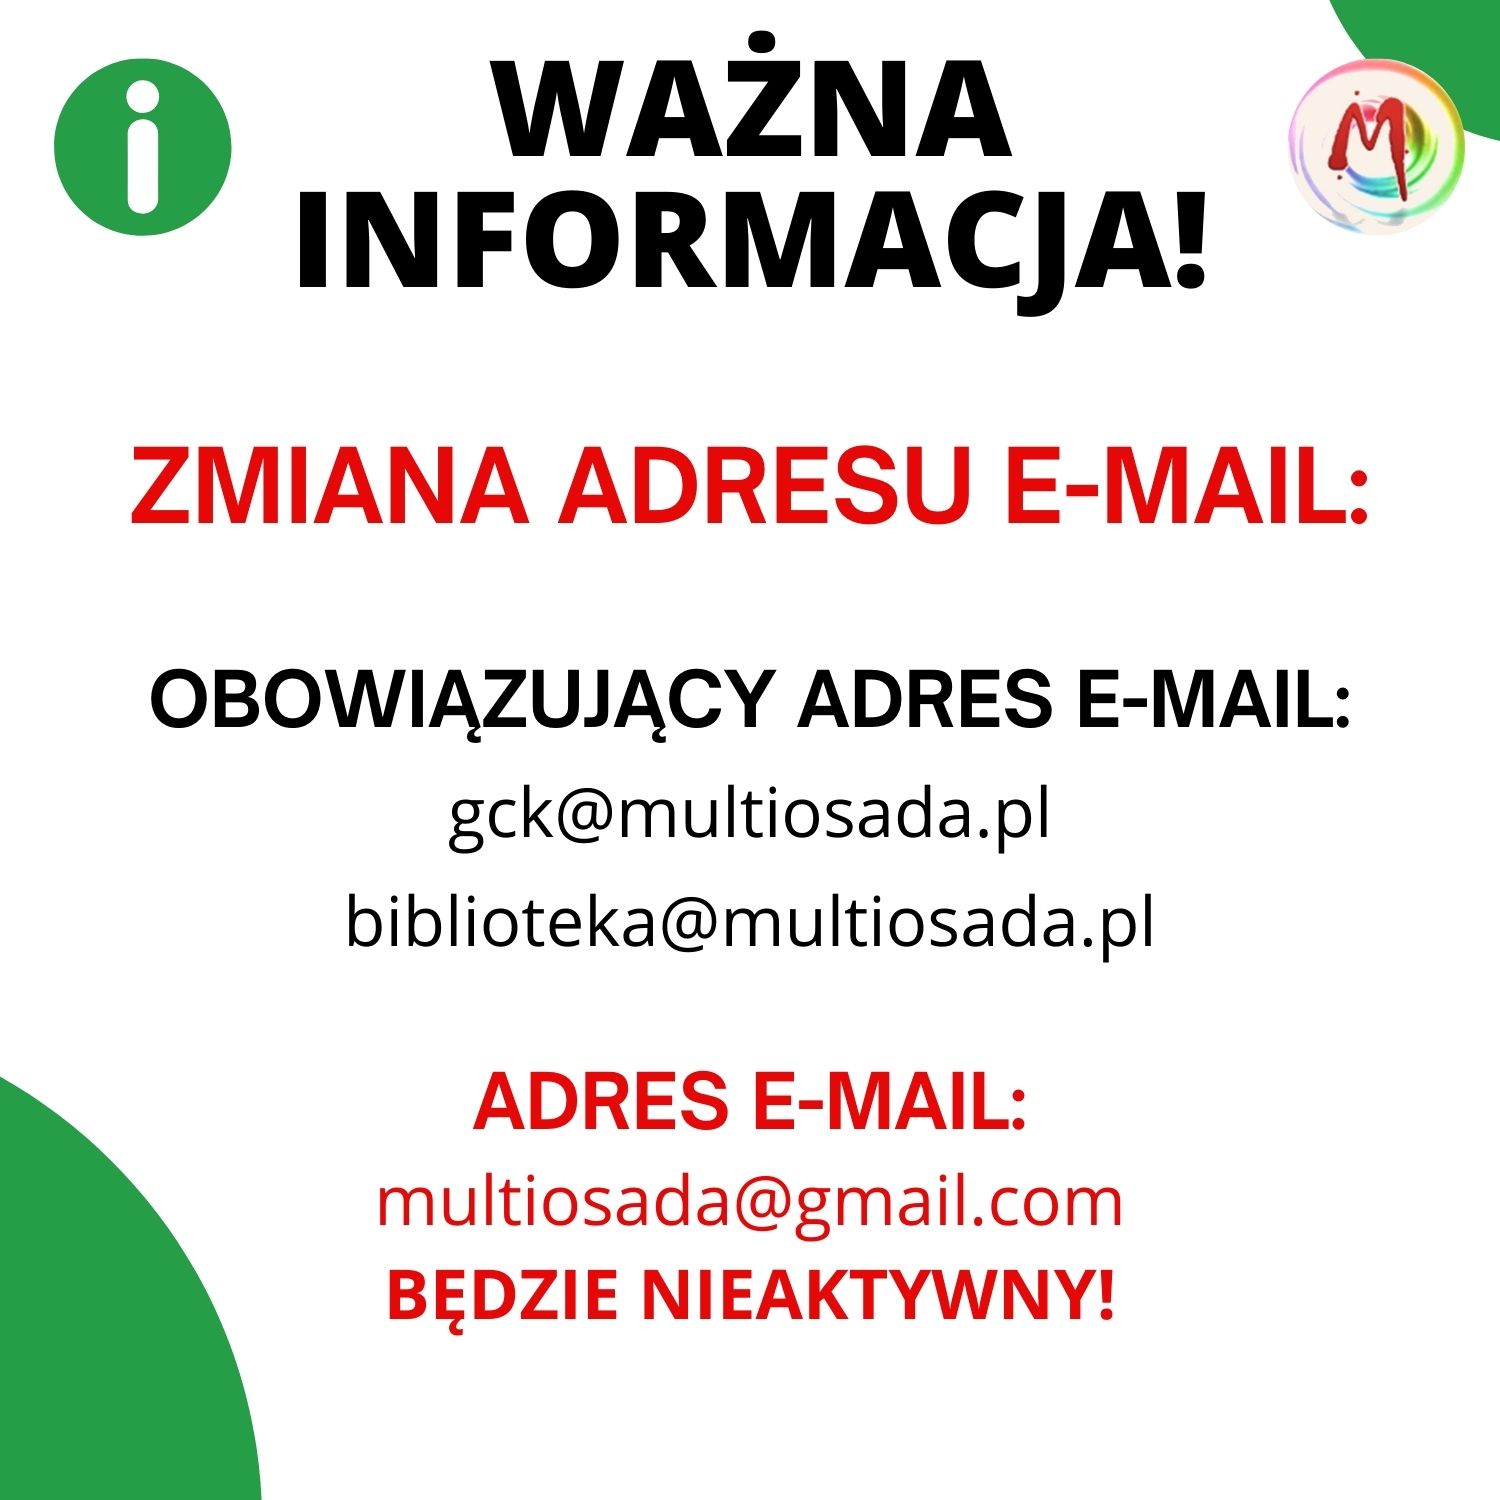 UWAGA-Zmiana-adresu-e-mail